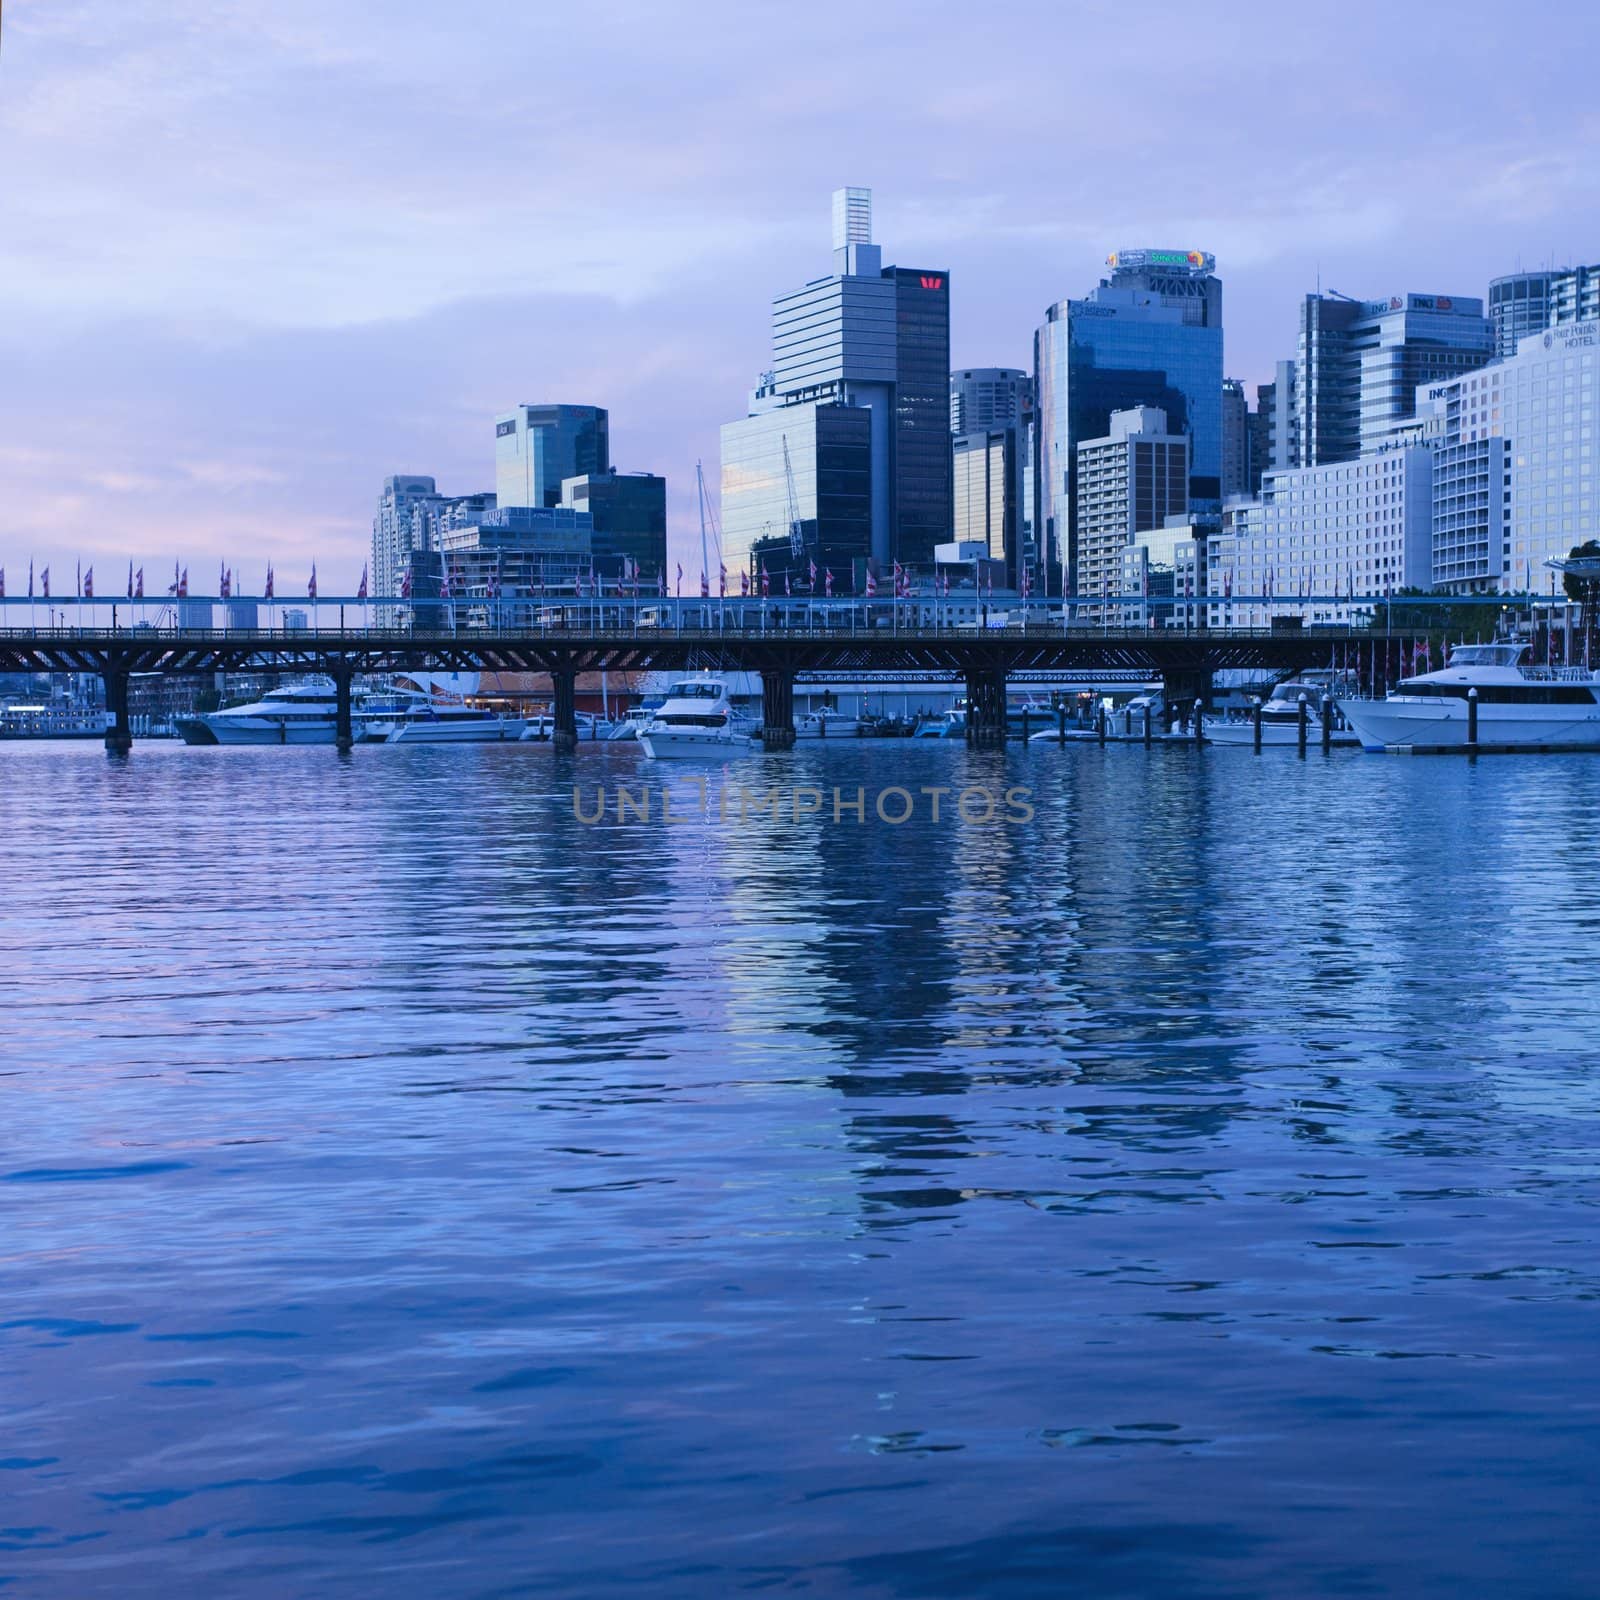 Pyrmont Bridge over Darling Harbour with skyscrapers in Sydney, Australia.